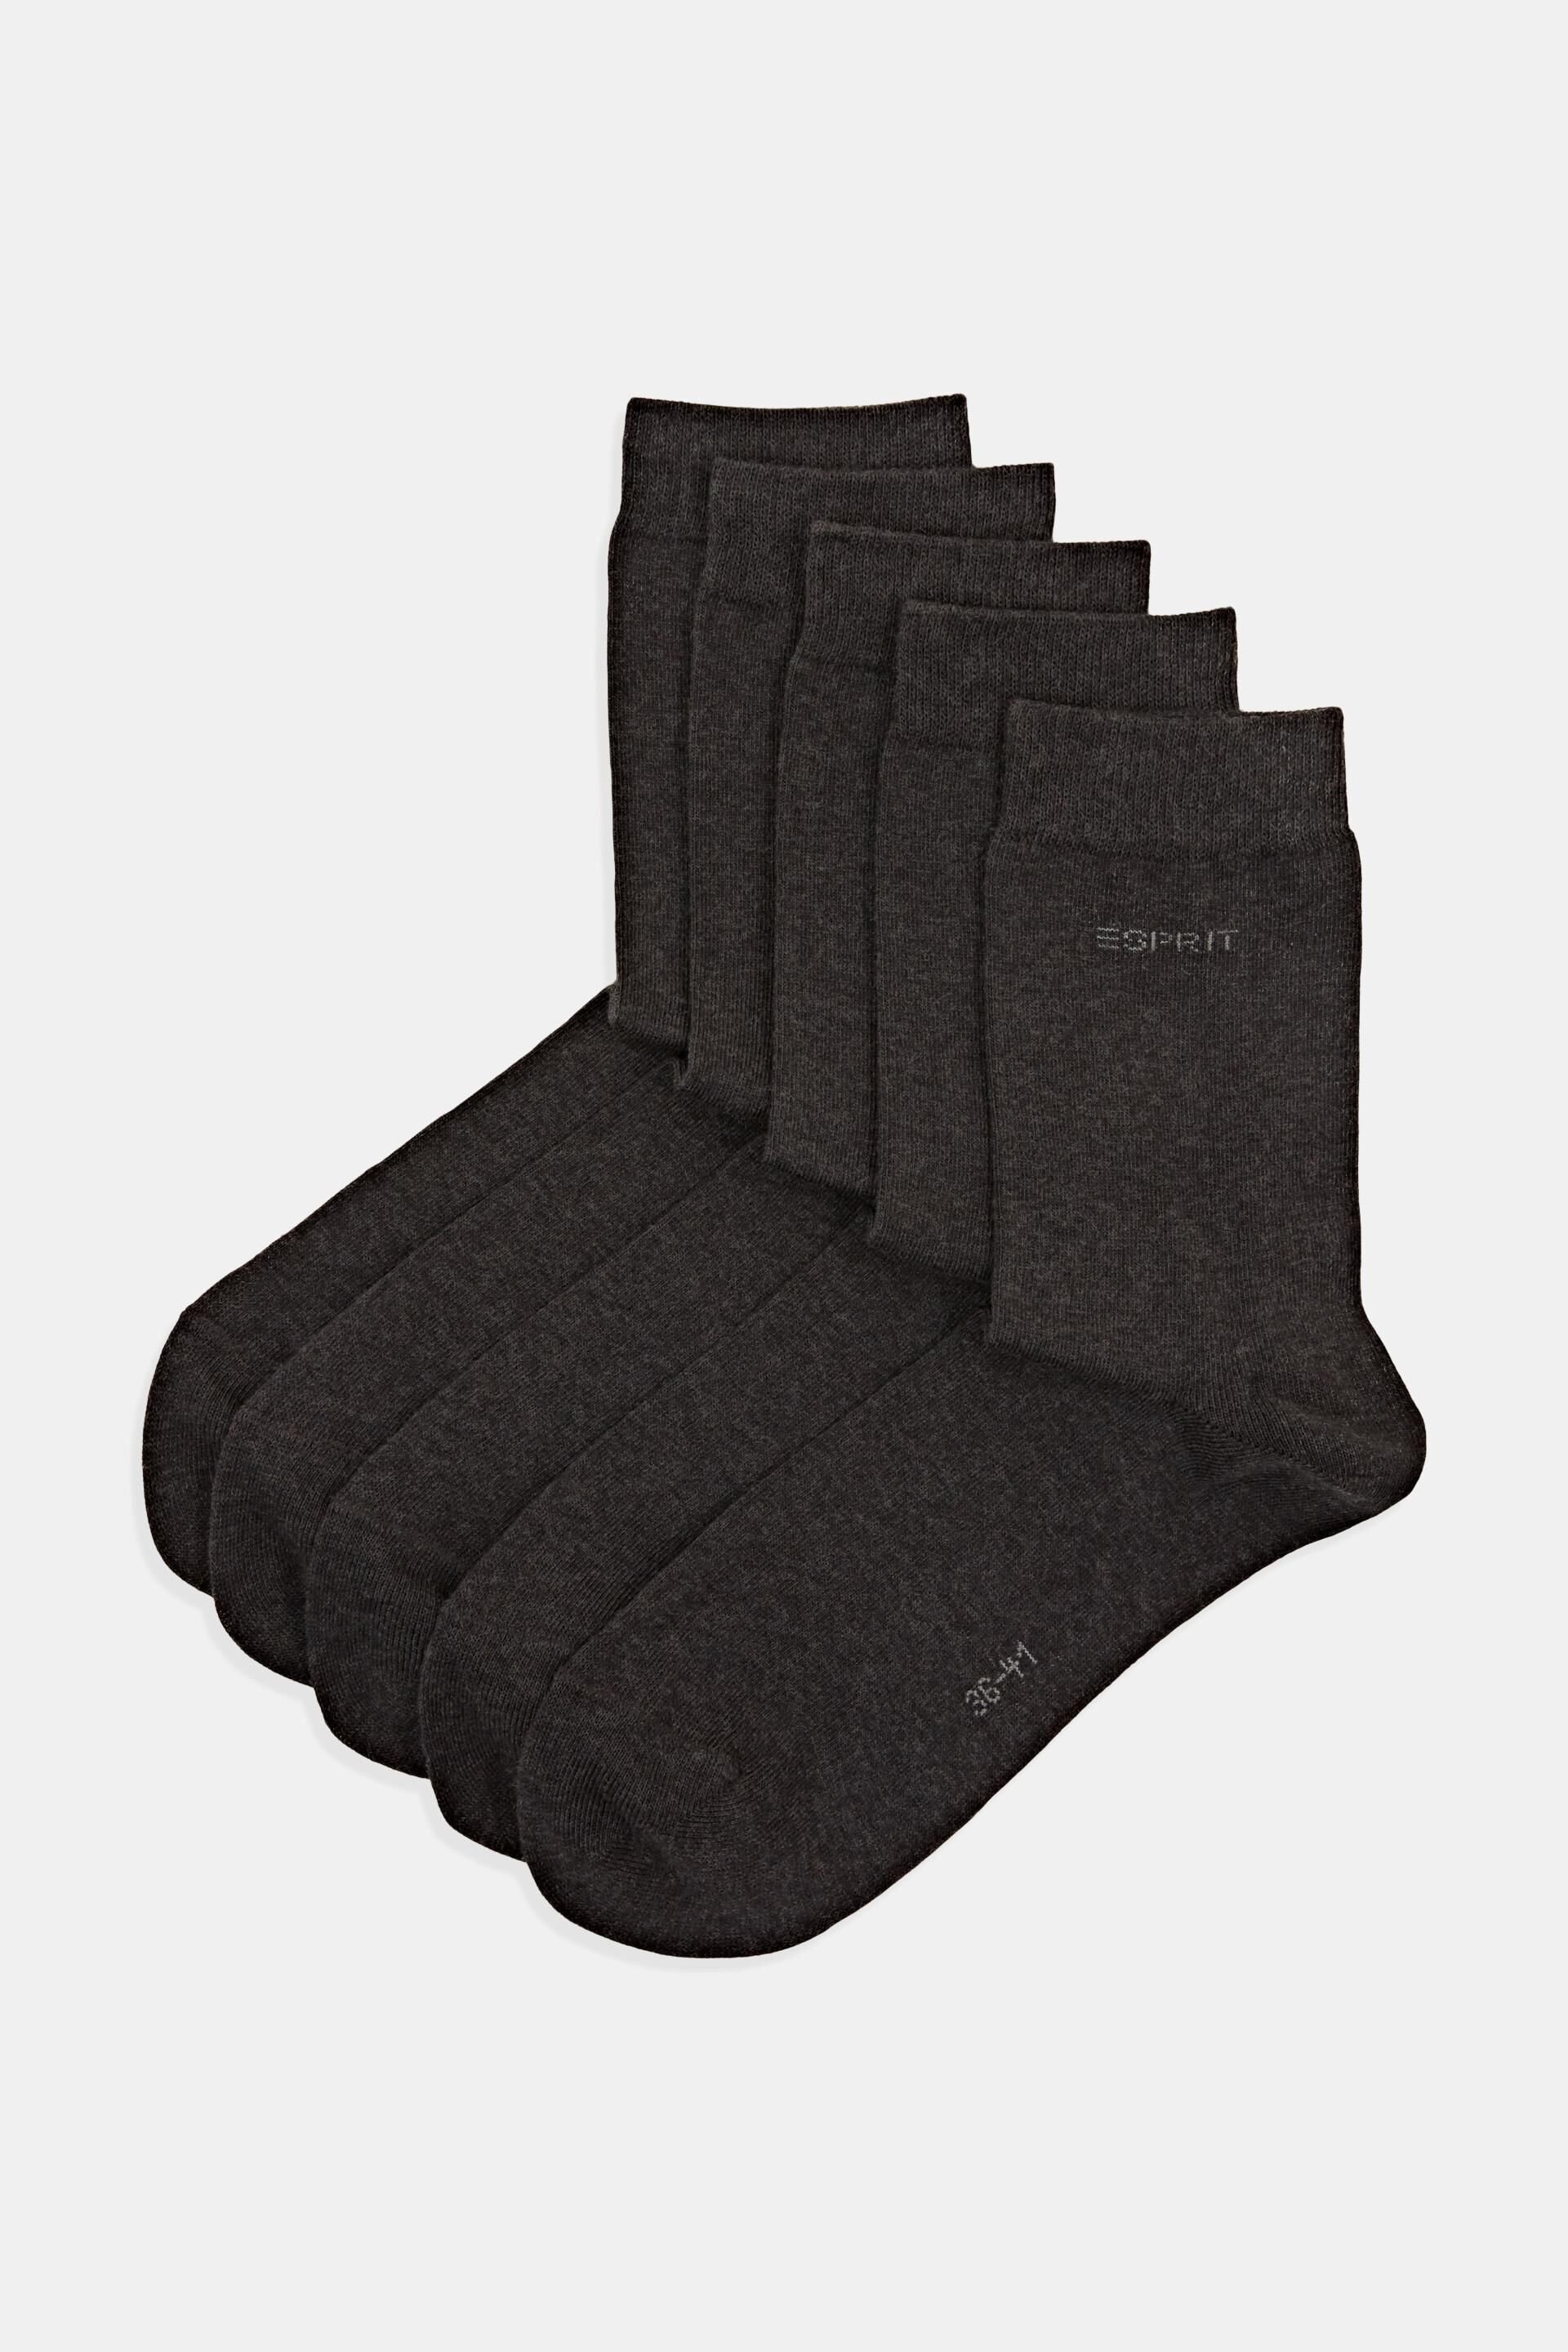 Esprit Online Store Pack of 5 plain socks, organic cotton